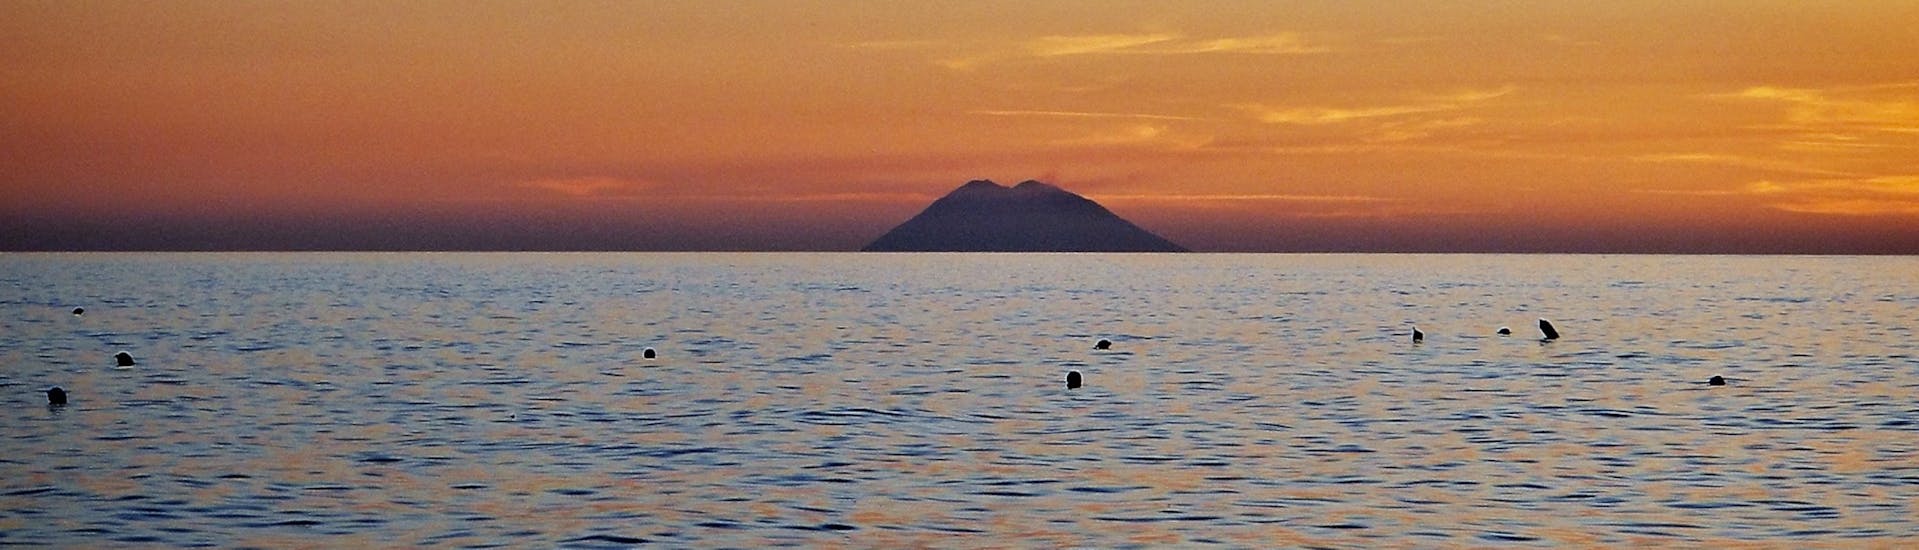 RIB-Bootstour bei Sonnenuntergang ab Tropea entlang der Küste der Götter.